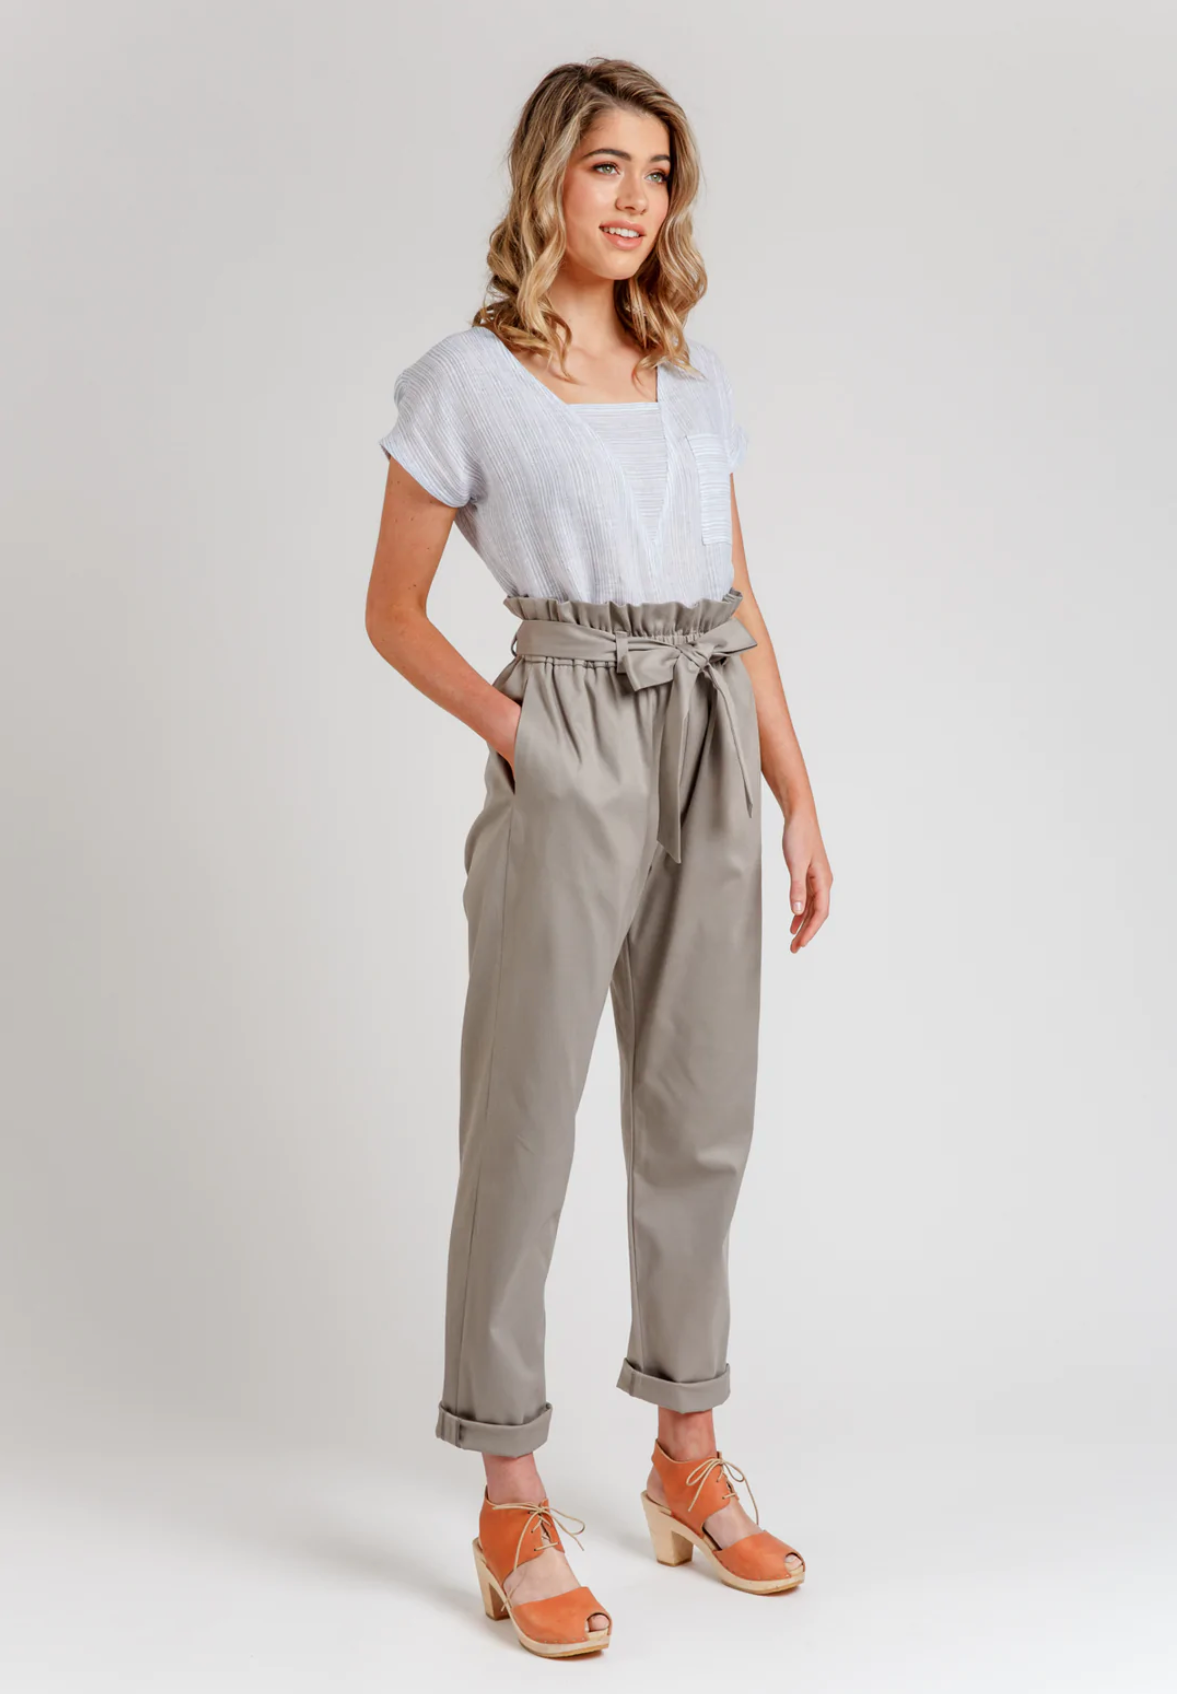 Opal pants and shorts - Paper pattern - MEGAN NIELSEN